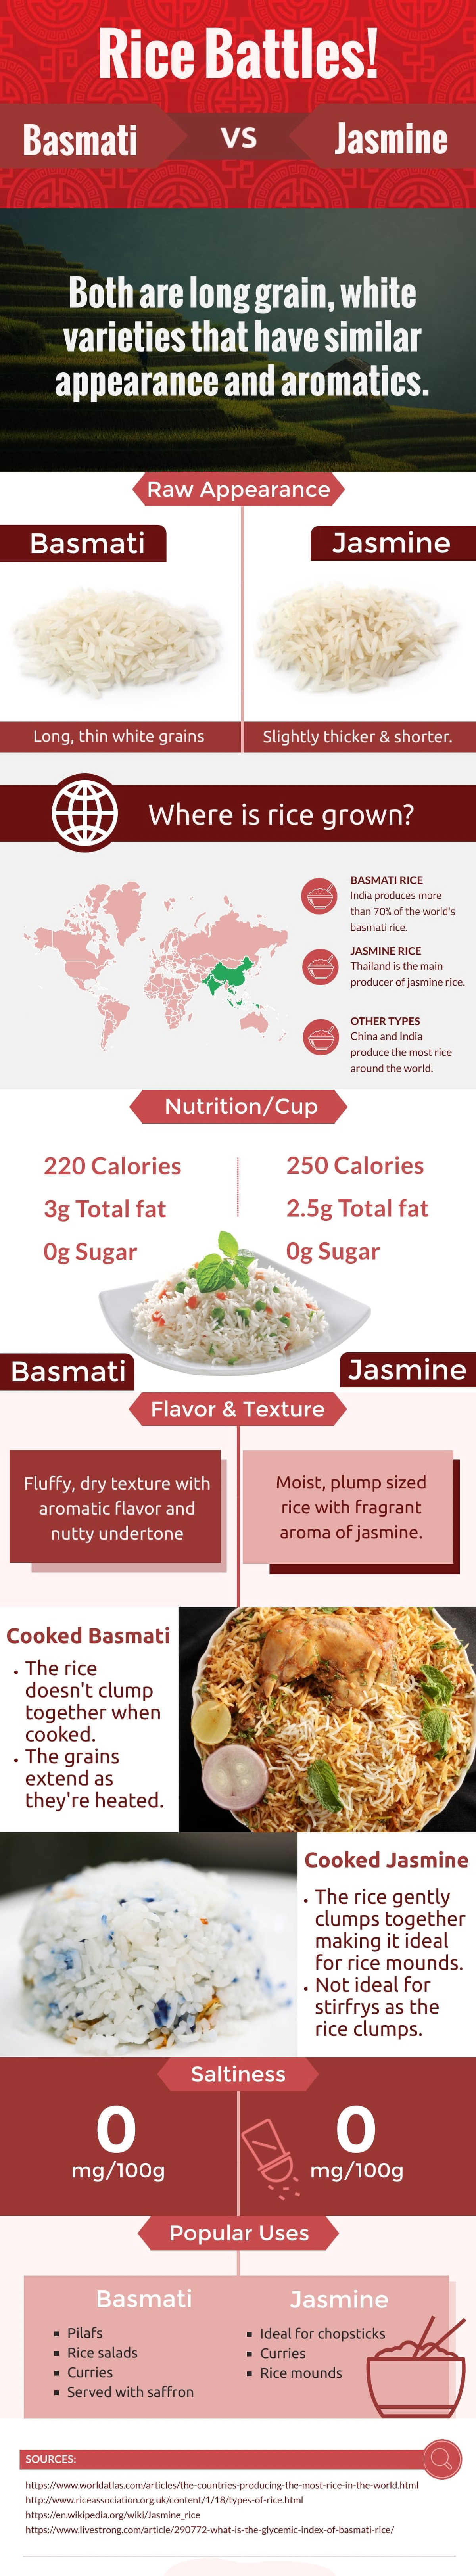 basmati vs jasmine rice infographic